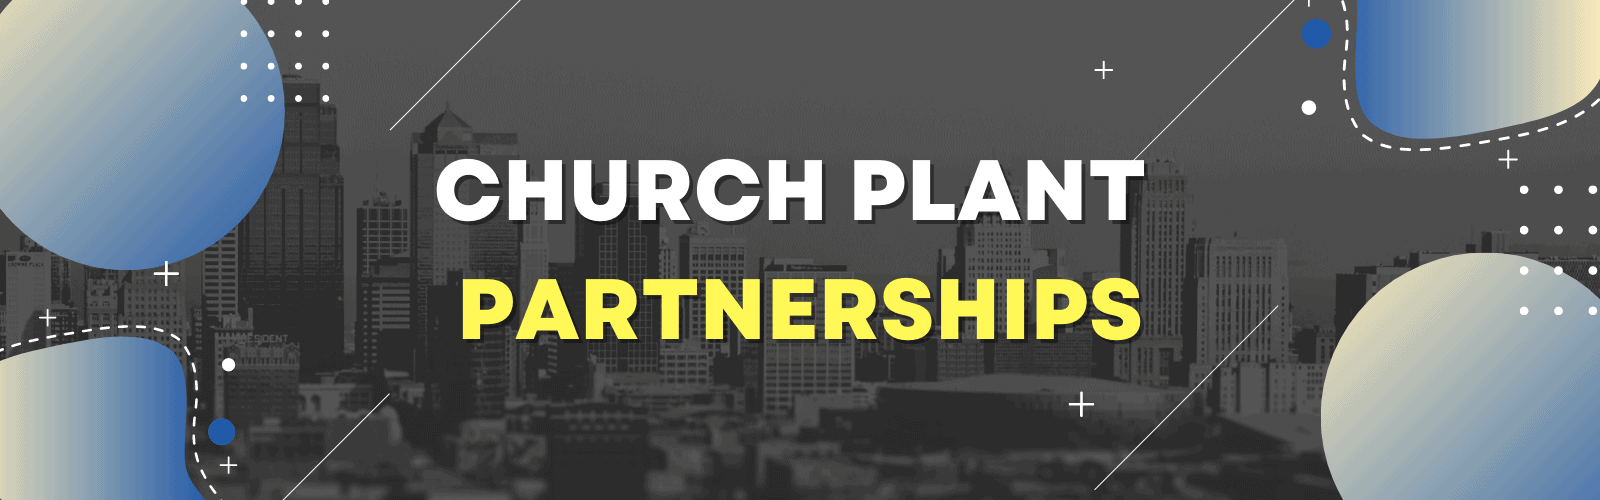 Web The Church Plant Partnership